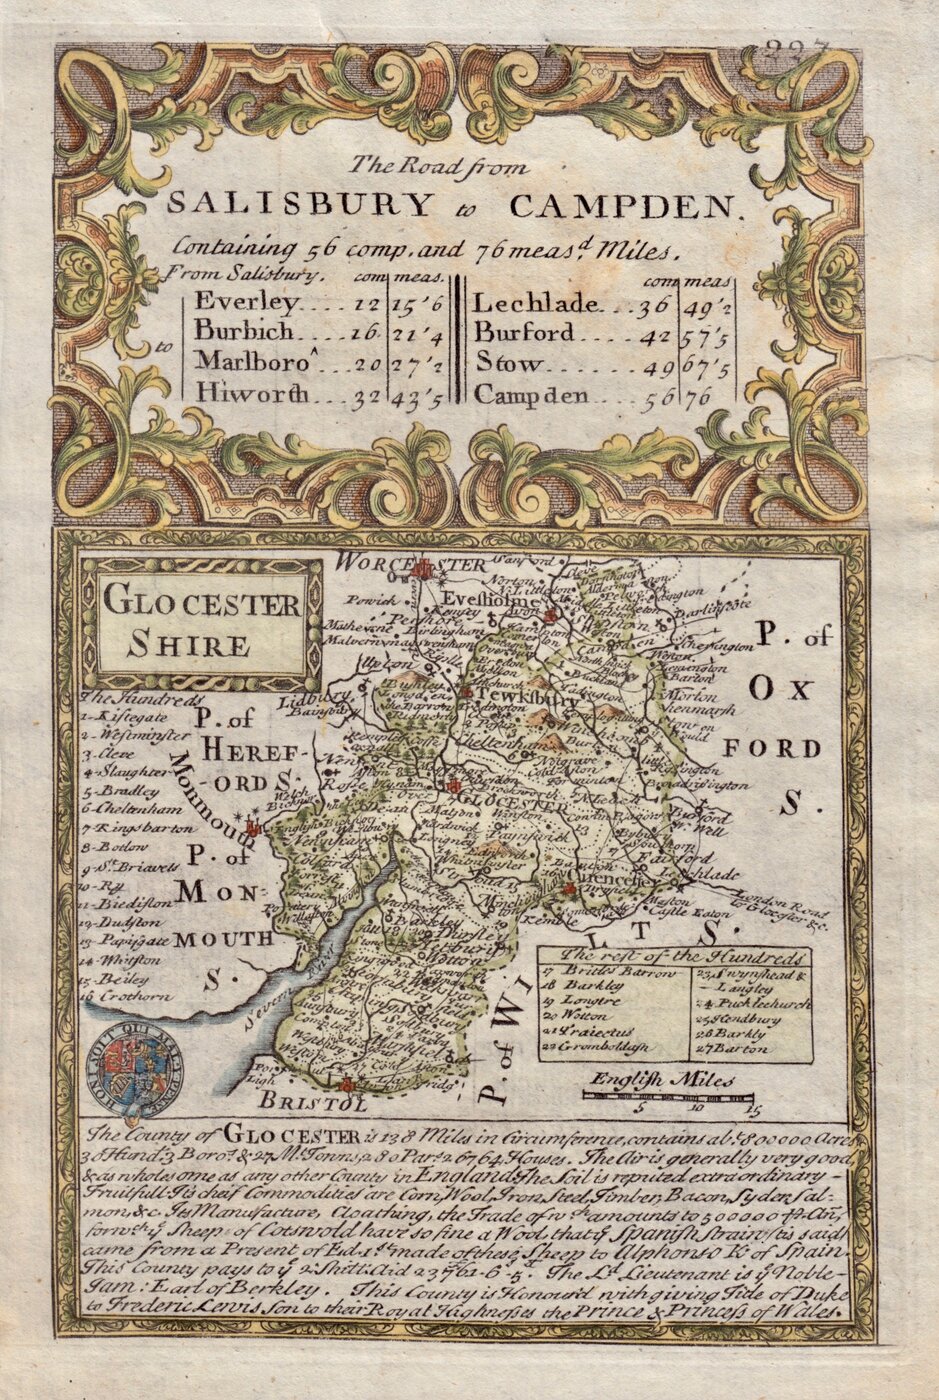 Gloucestershire Maps